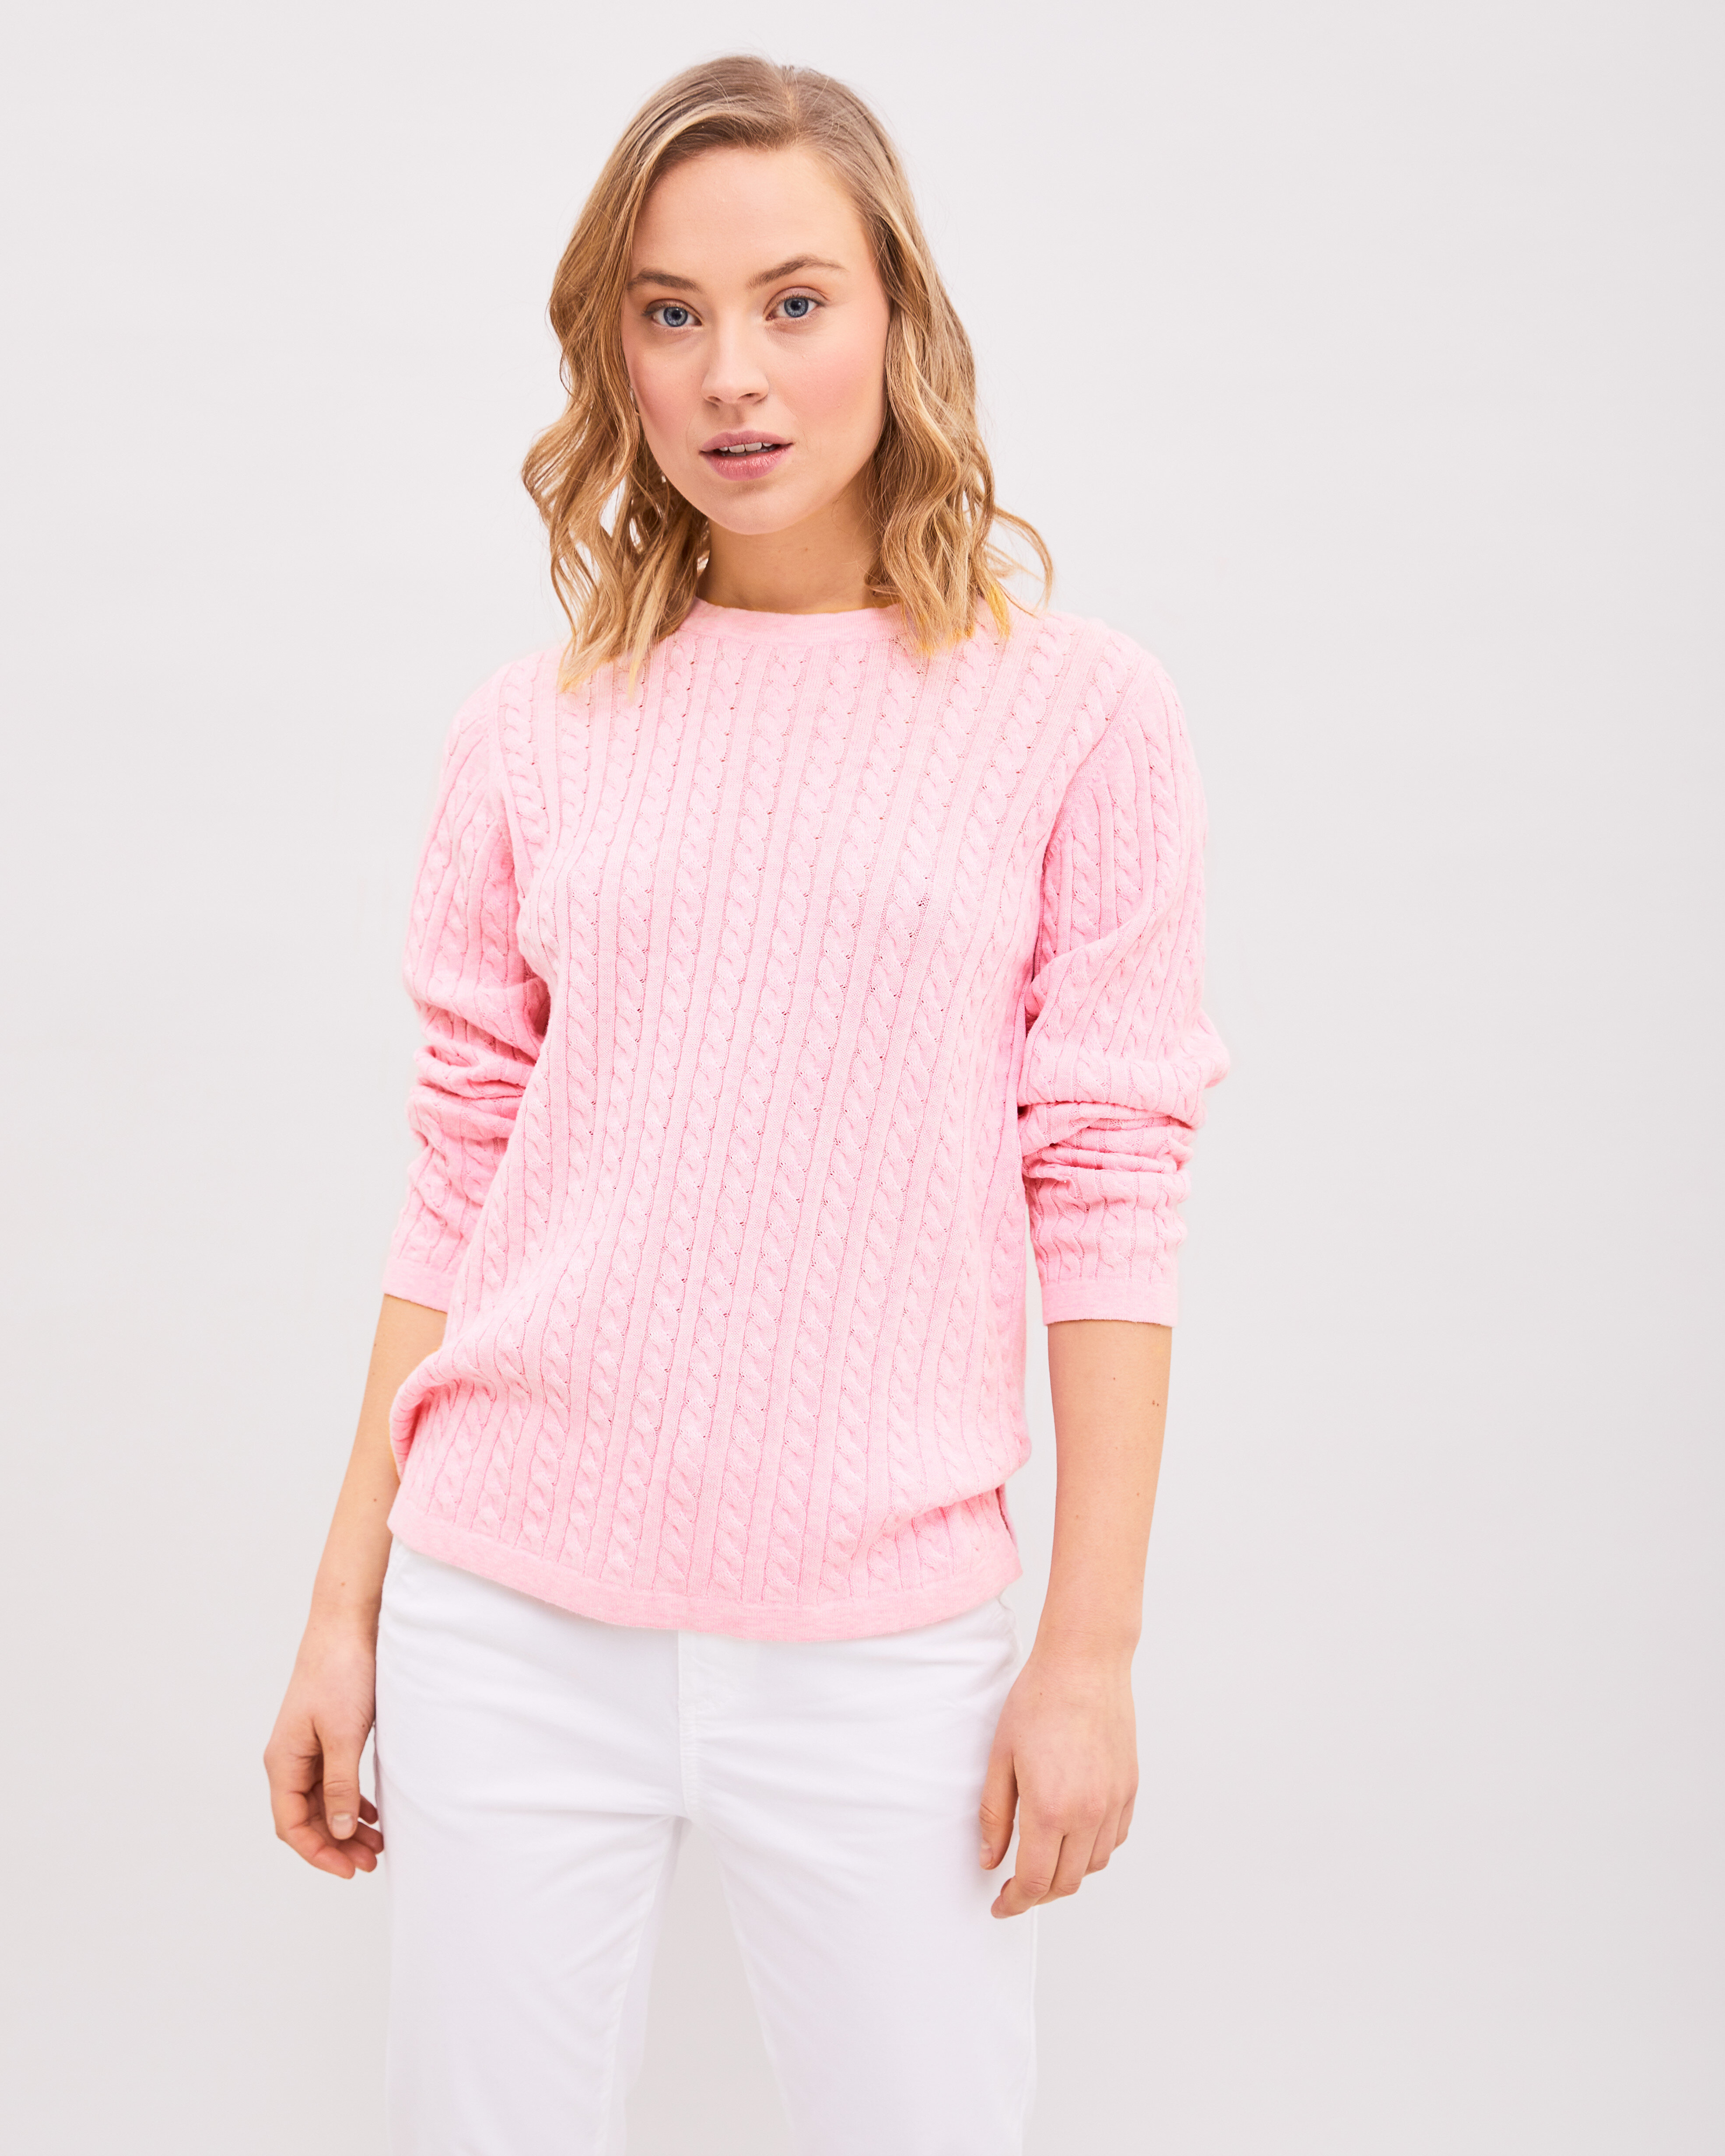 Cate Cabel Sweater